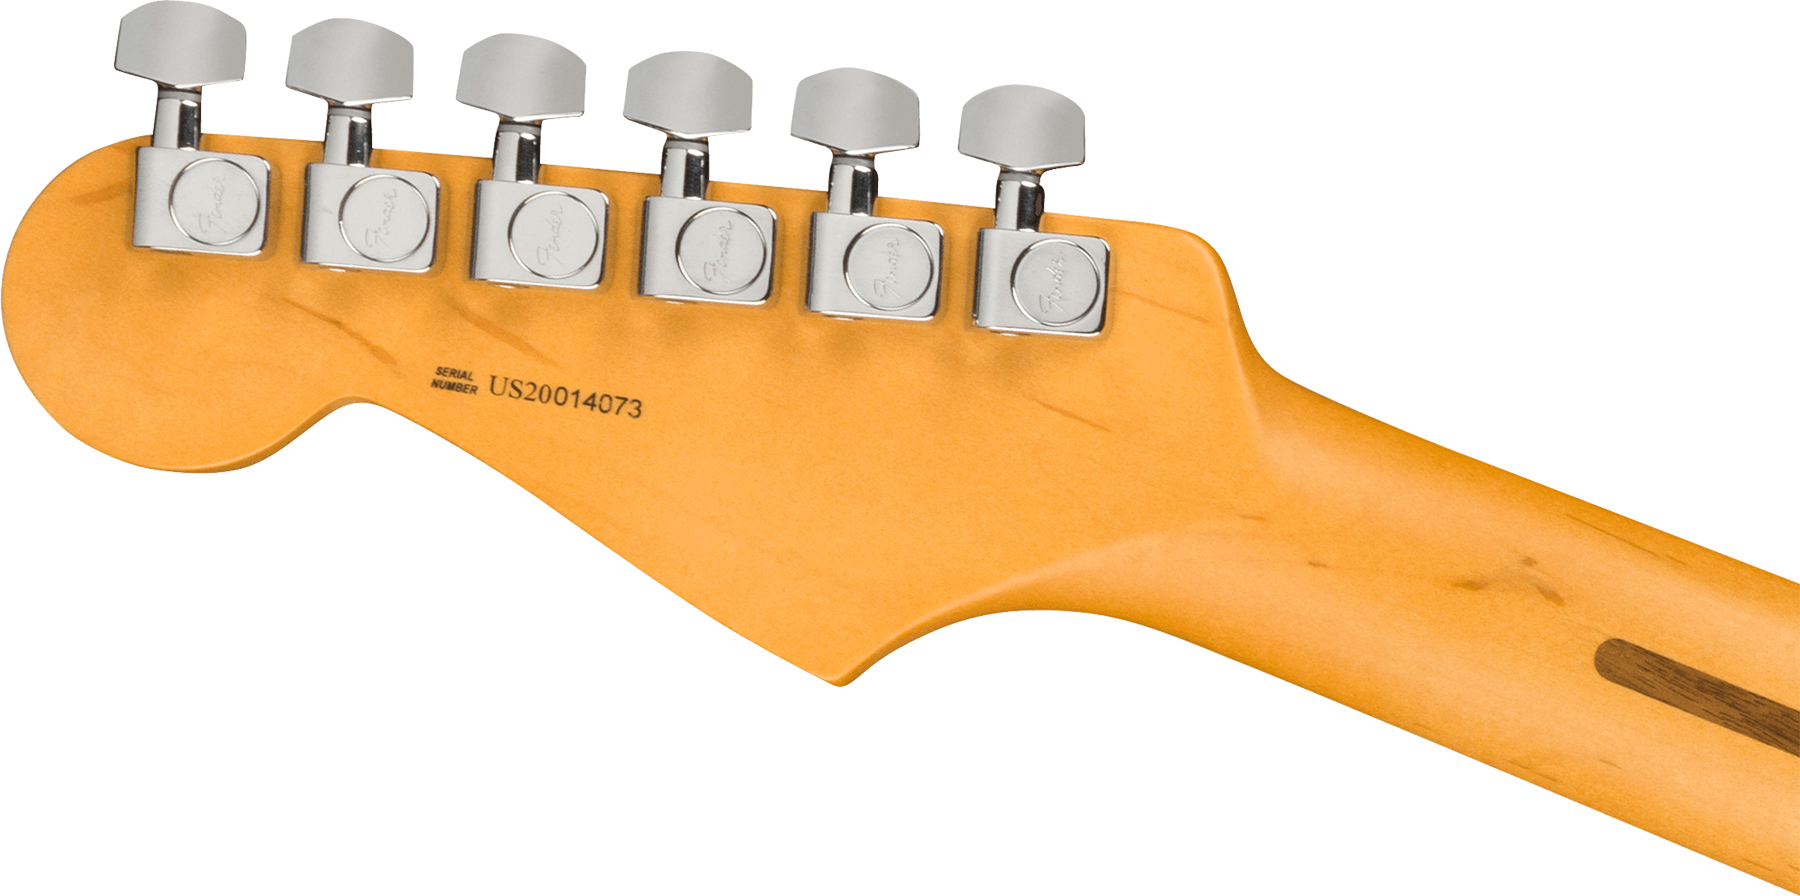 Fender Strat American Professional Ii Usa Rw - Olympic White - Str shape electric guitar - Variation 3